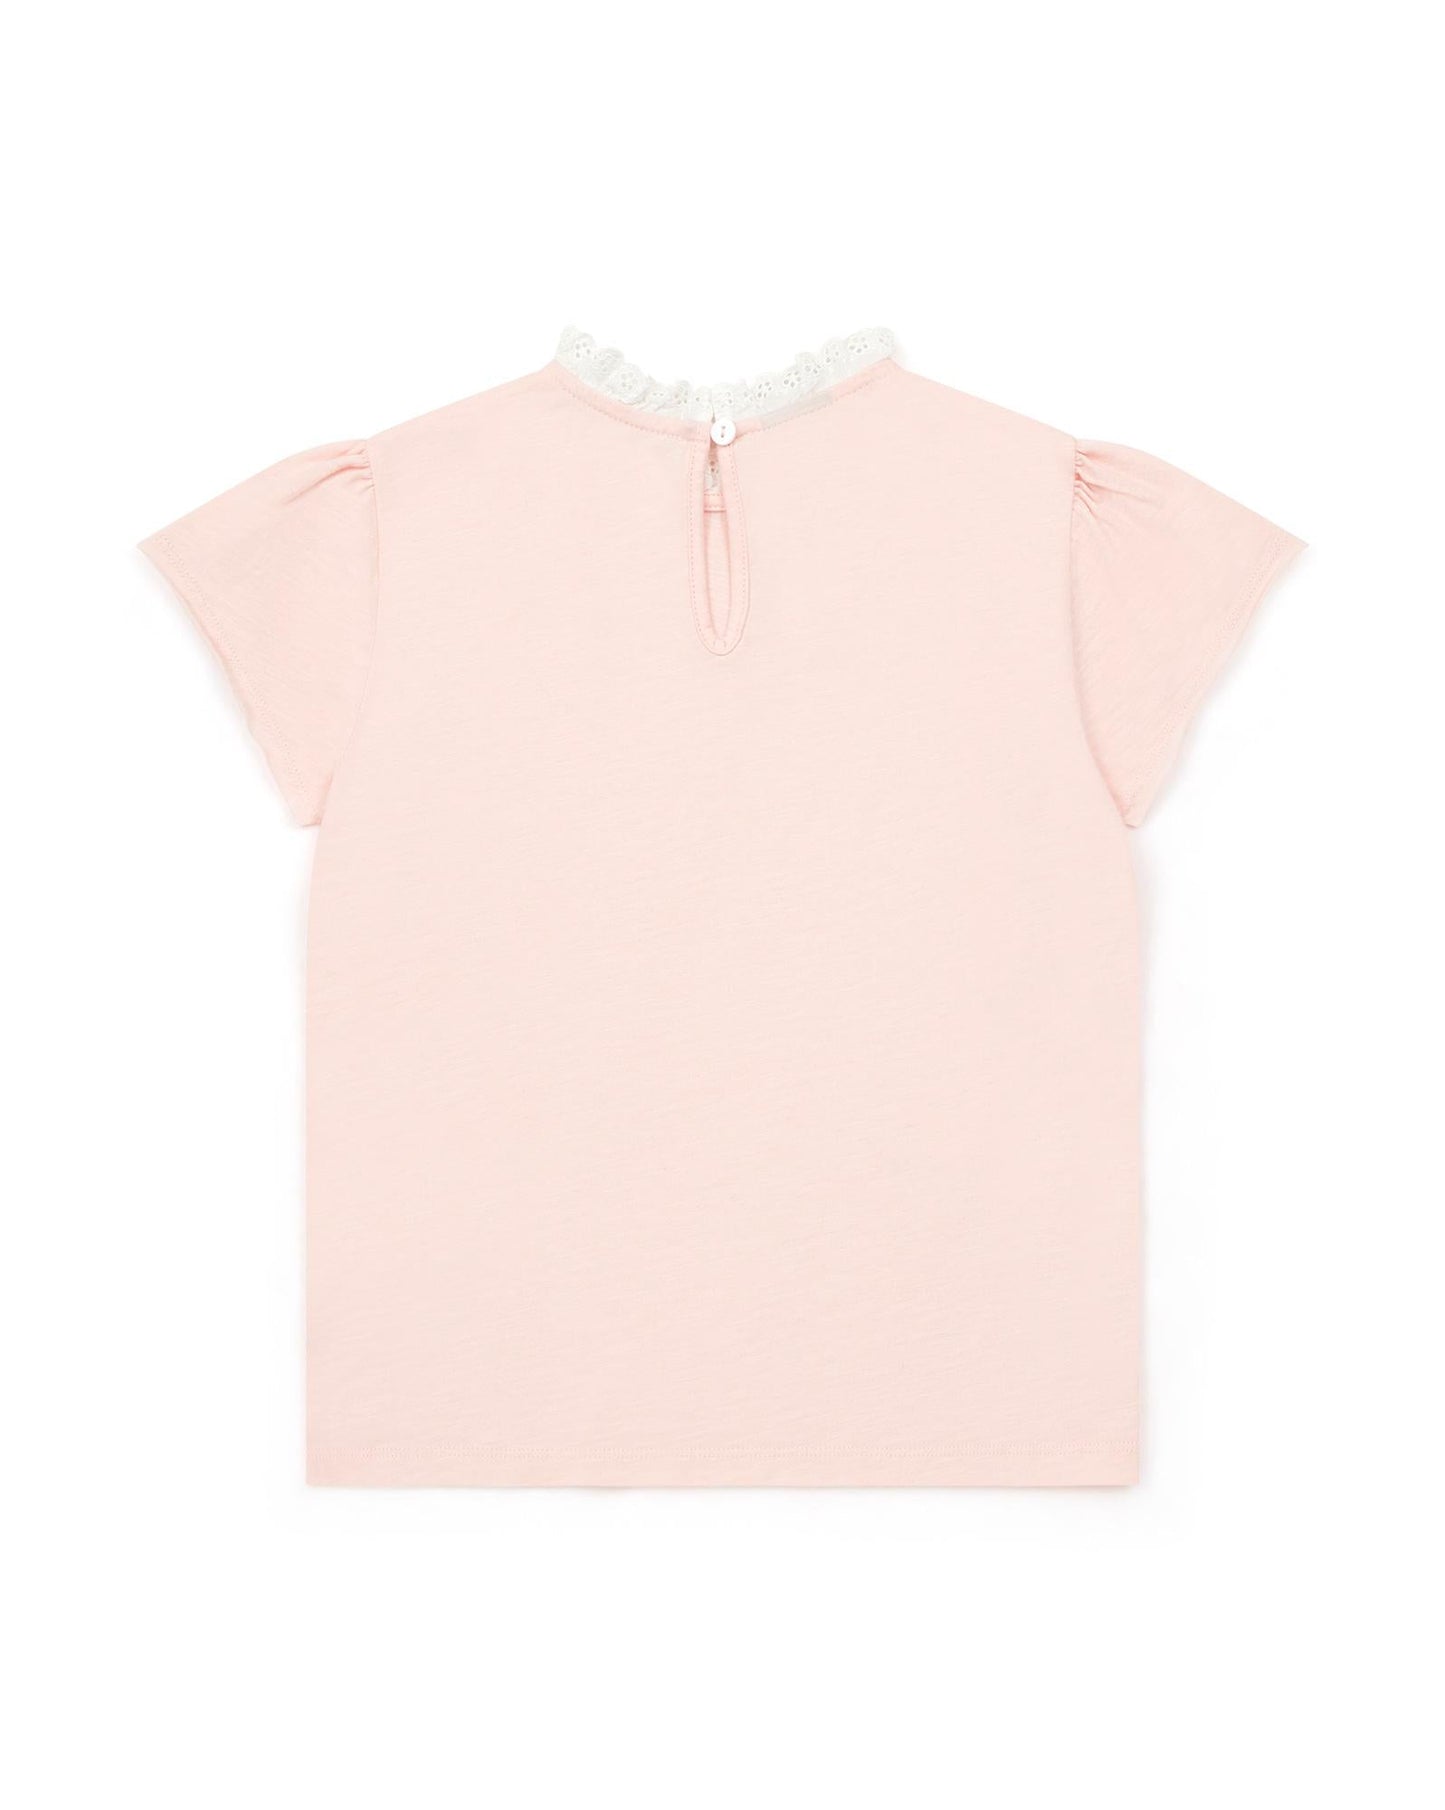 Tiliateef t-shirt Pink In 100% organic cotton